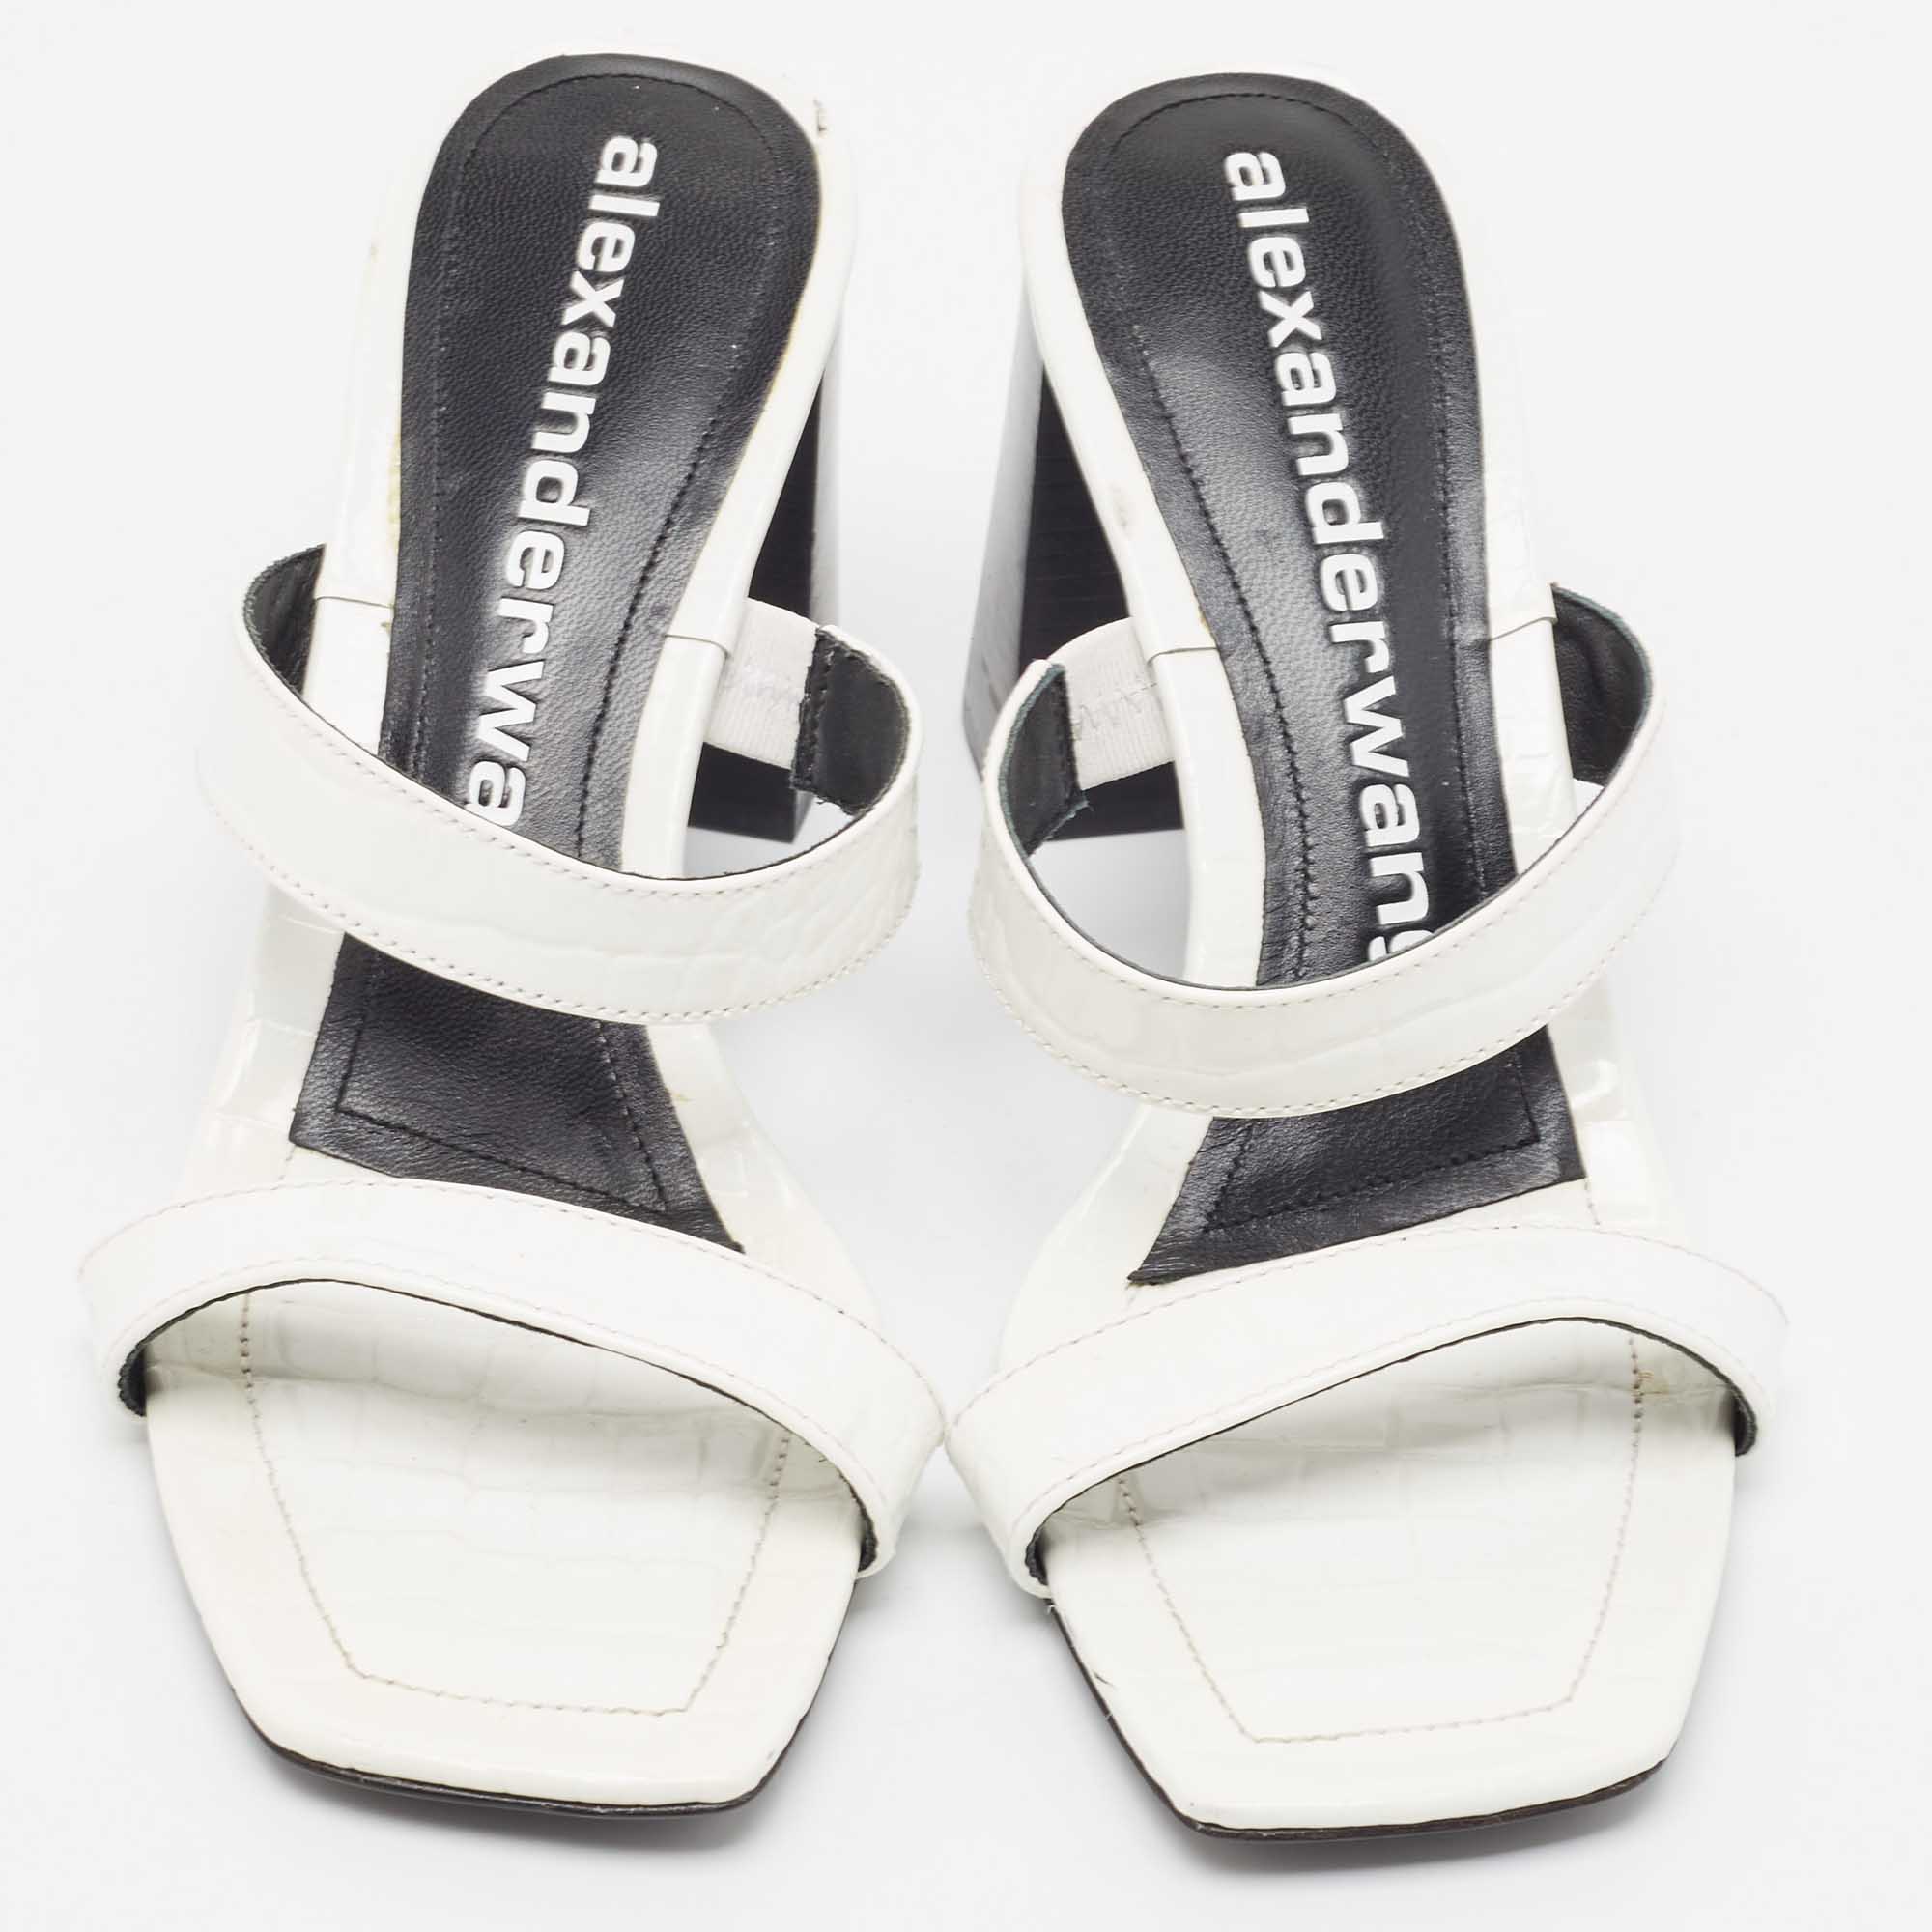 Alexander Wang White Croc Embossed Patent Leather Block Heel Slide Sandals Size 39